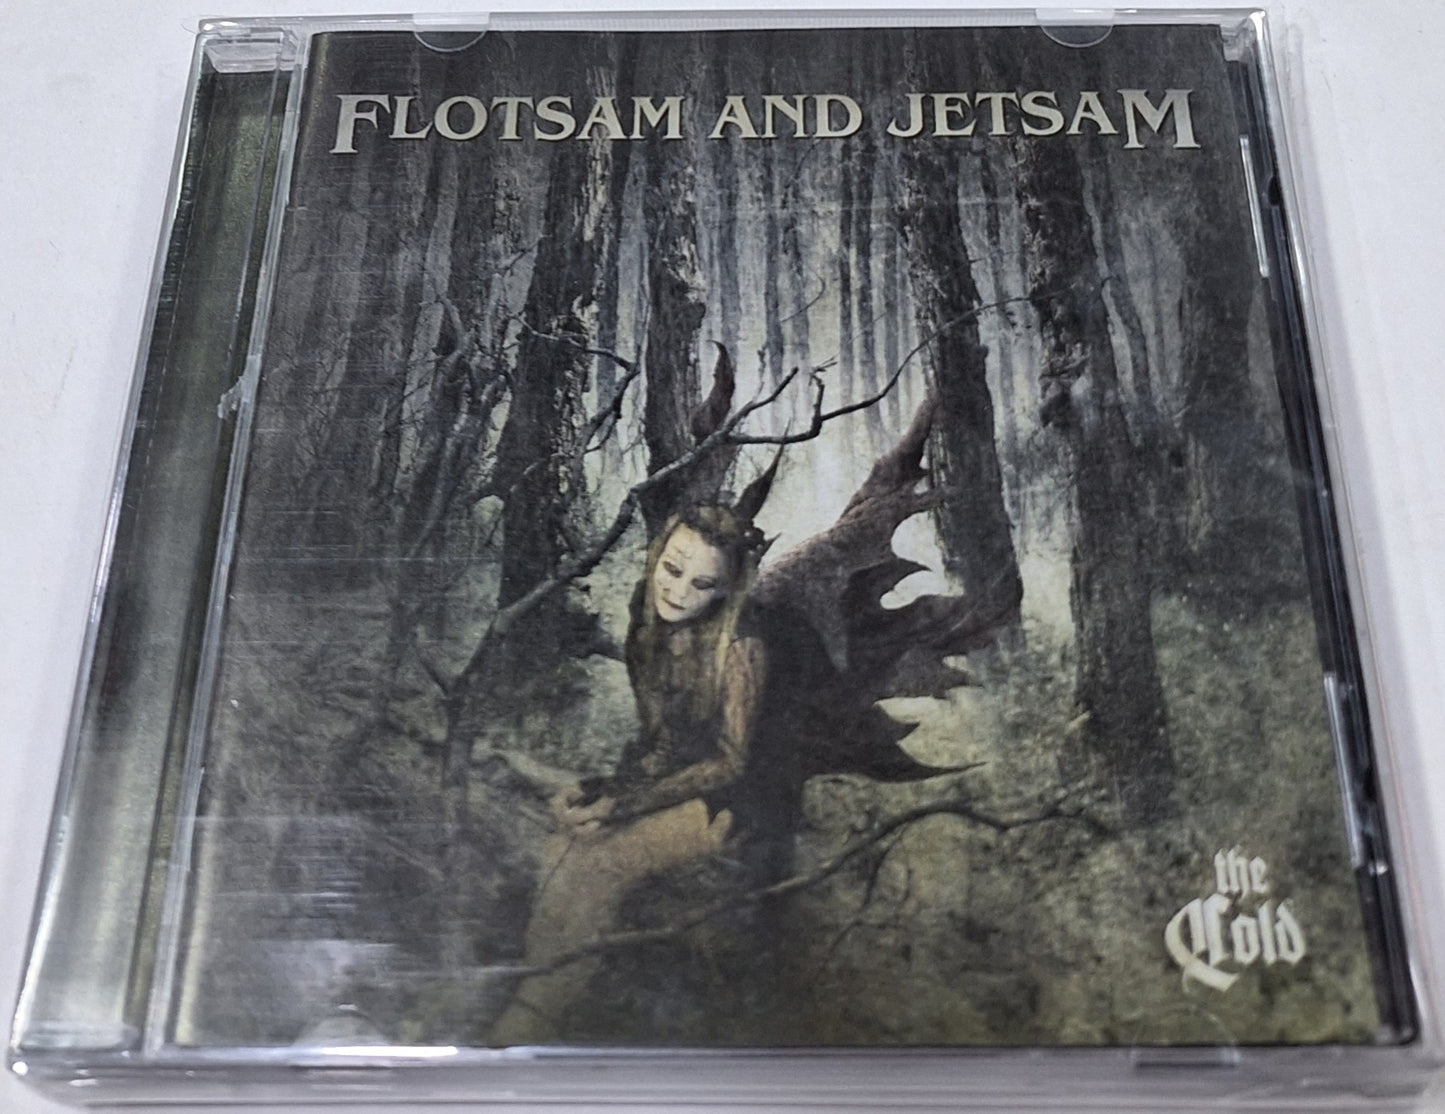 FLOTSAM AND JETSAM - THE COLD CD